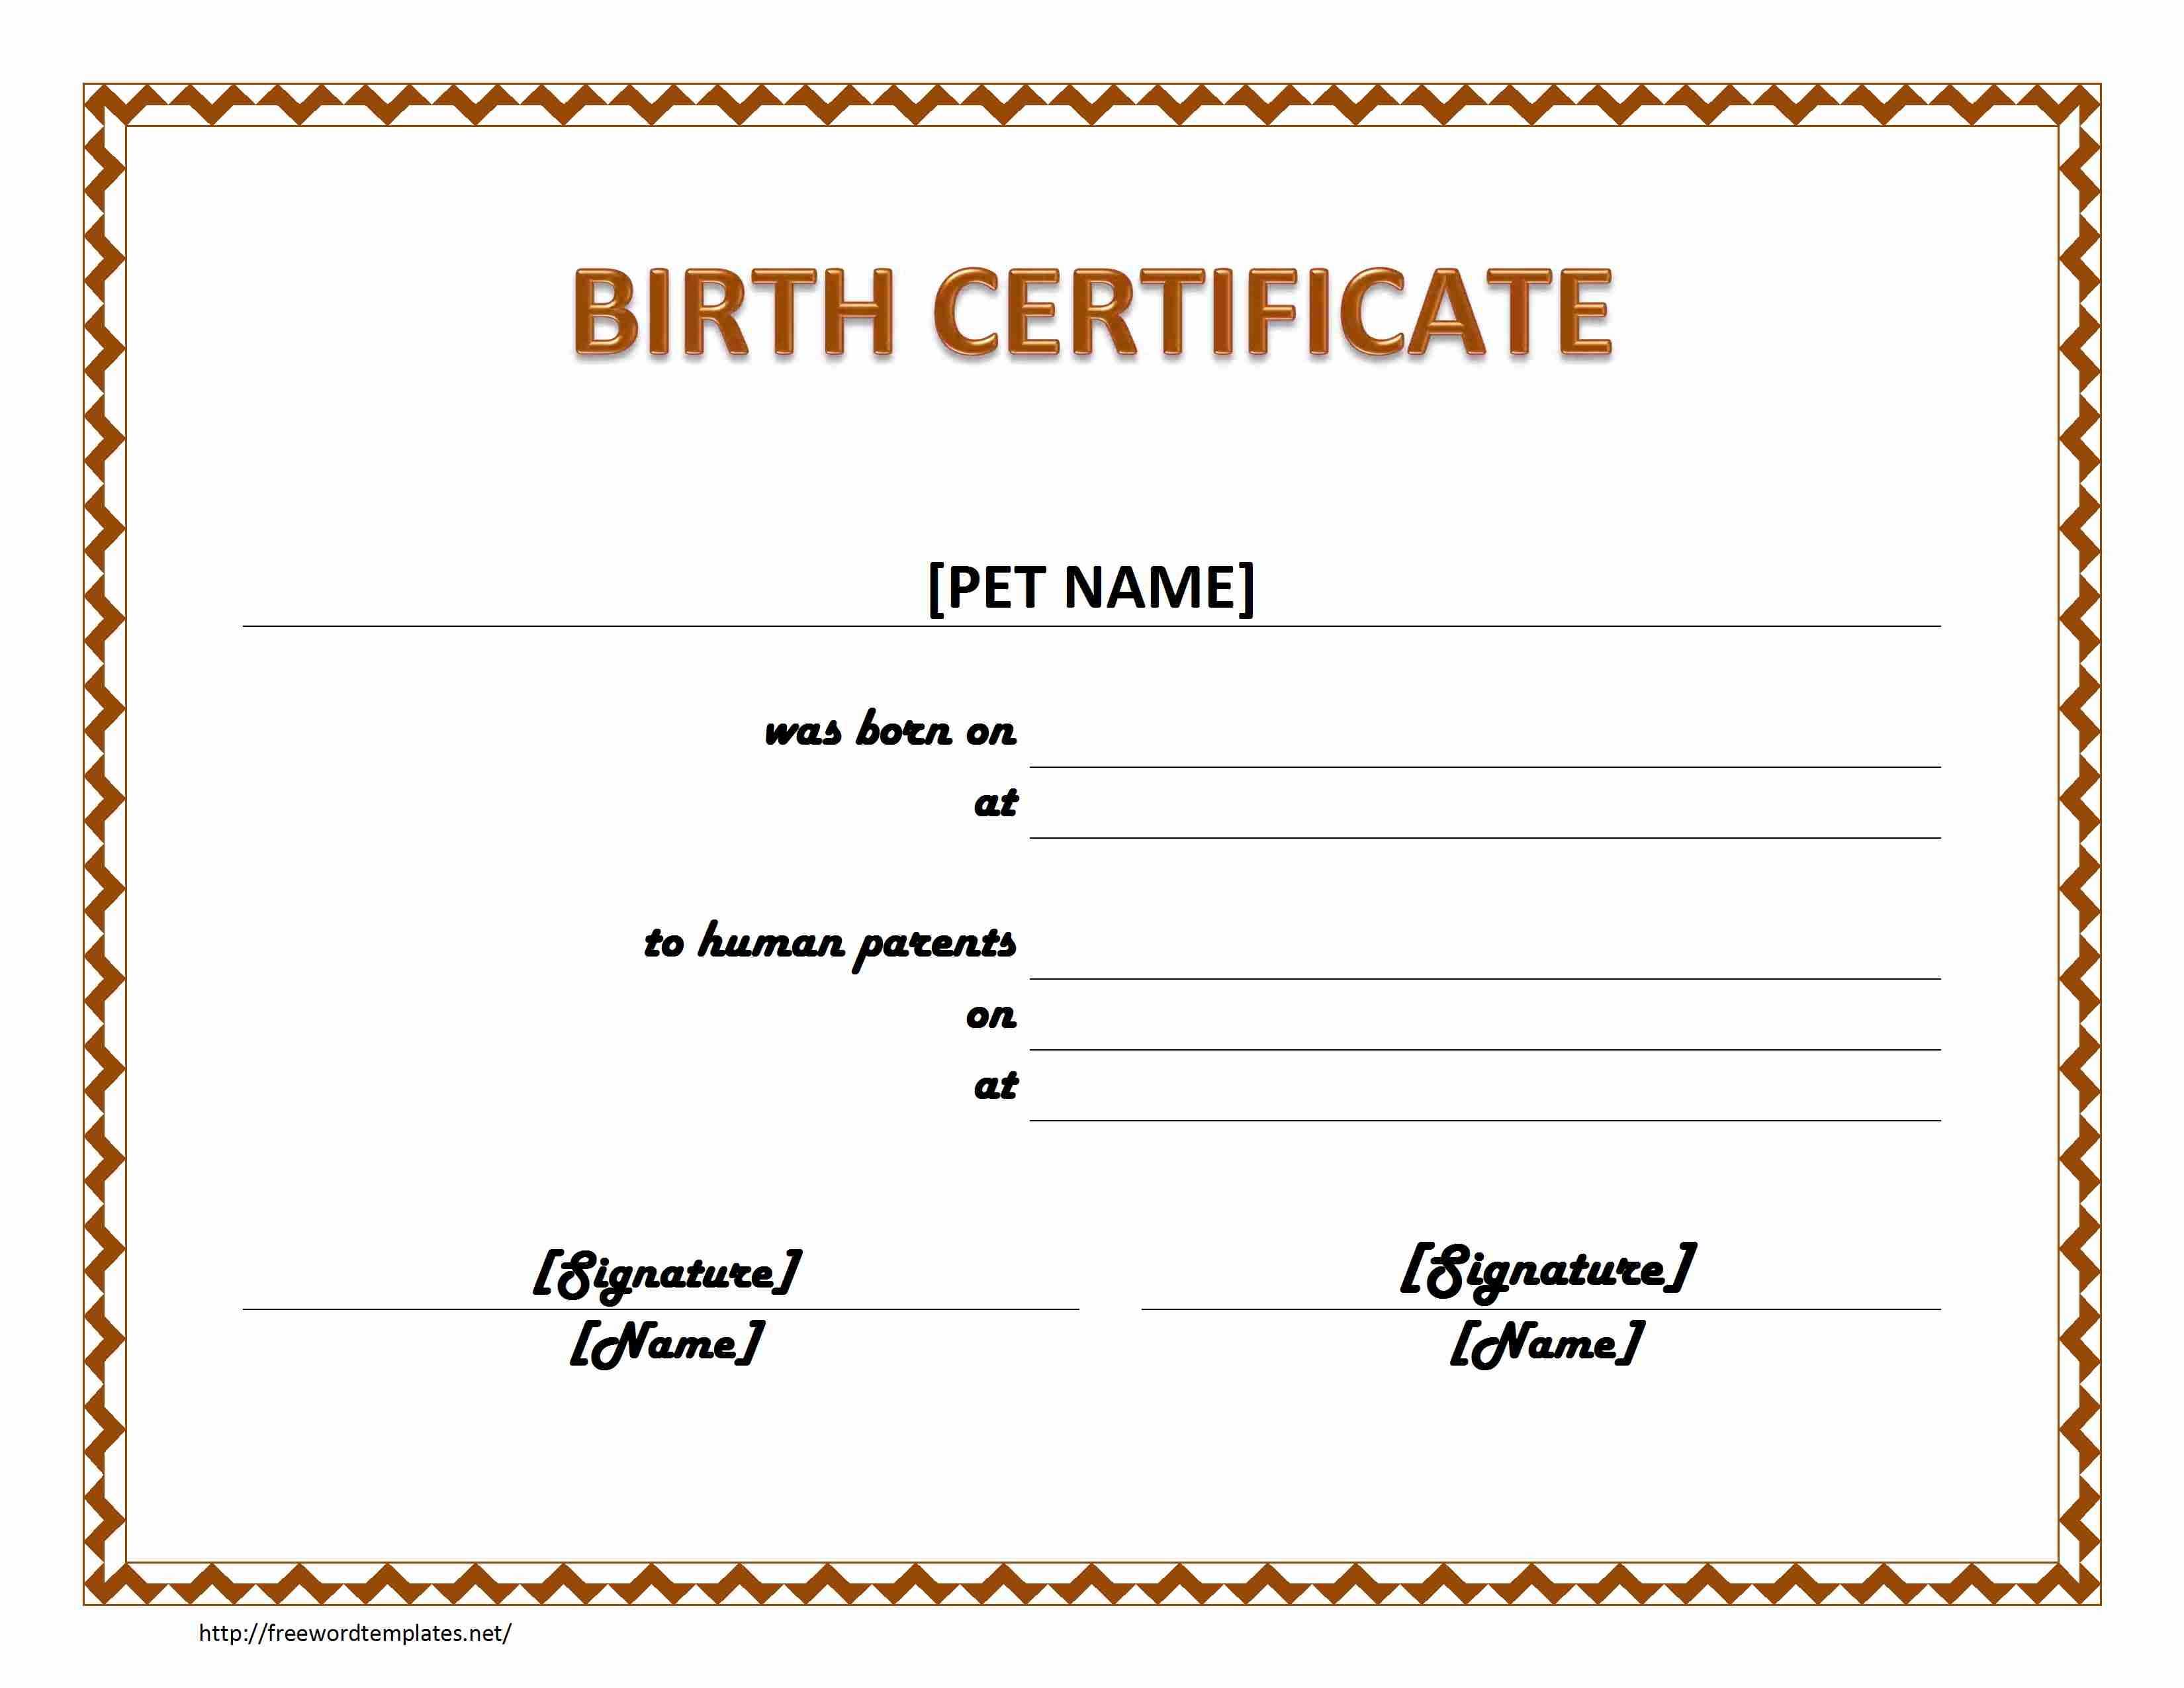 Pet Birth Certificate Maker | Pet Birth Certificate For Word Inside Service Dog Certificate Template